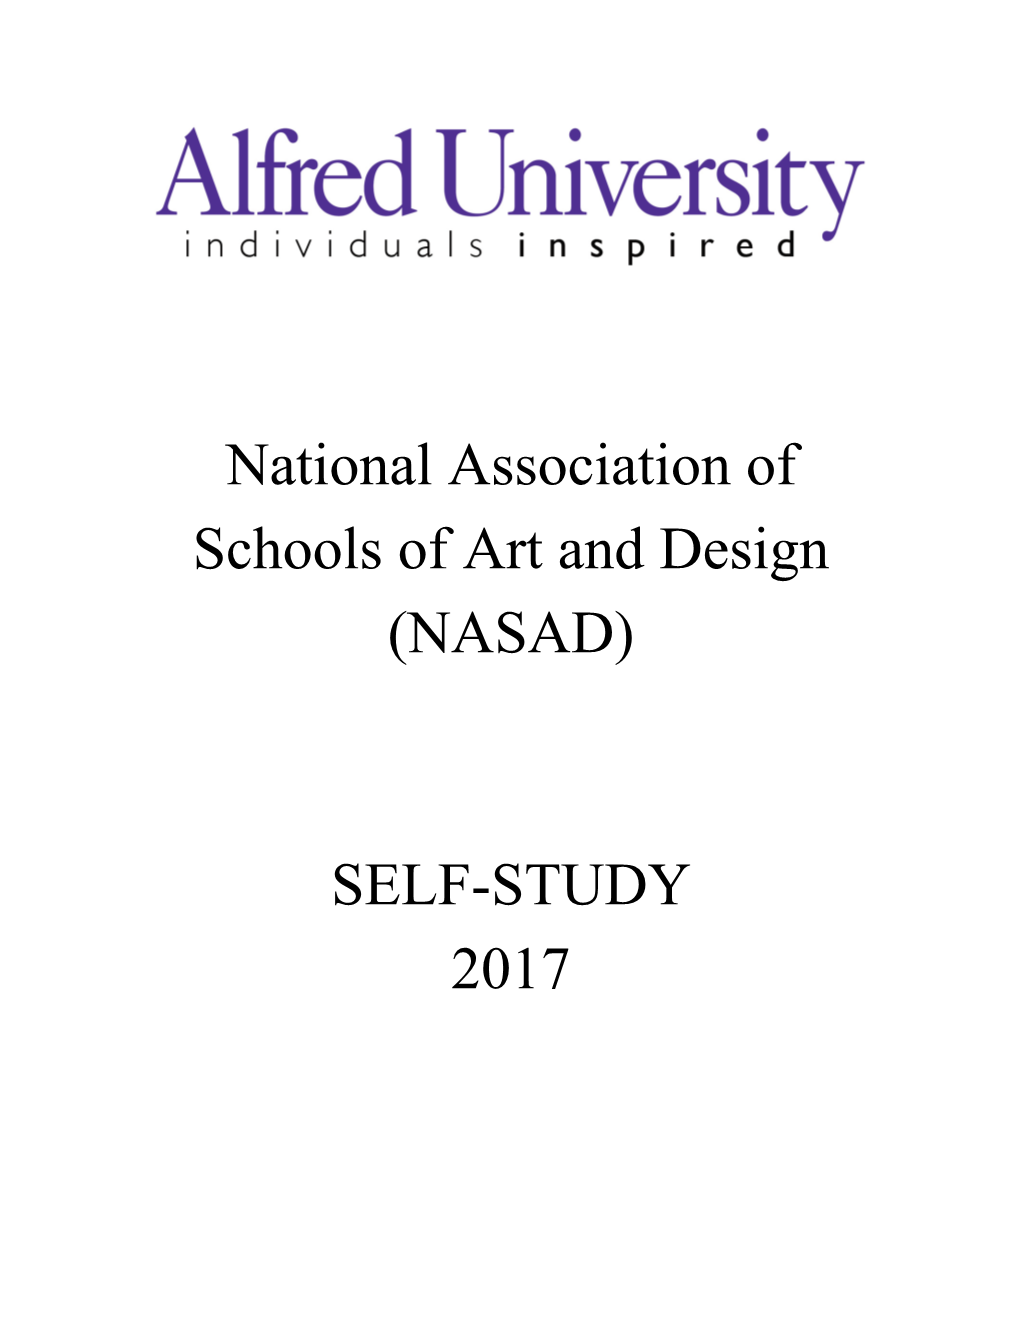 National Association of Schools of Art and Design (NASAD) SELF-STUDY 2017